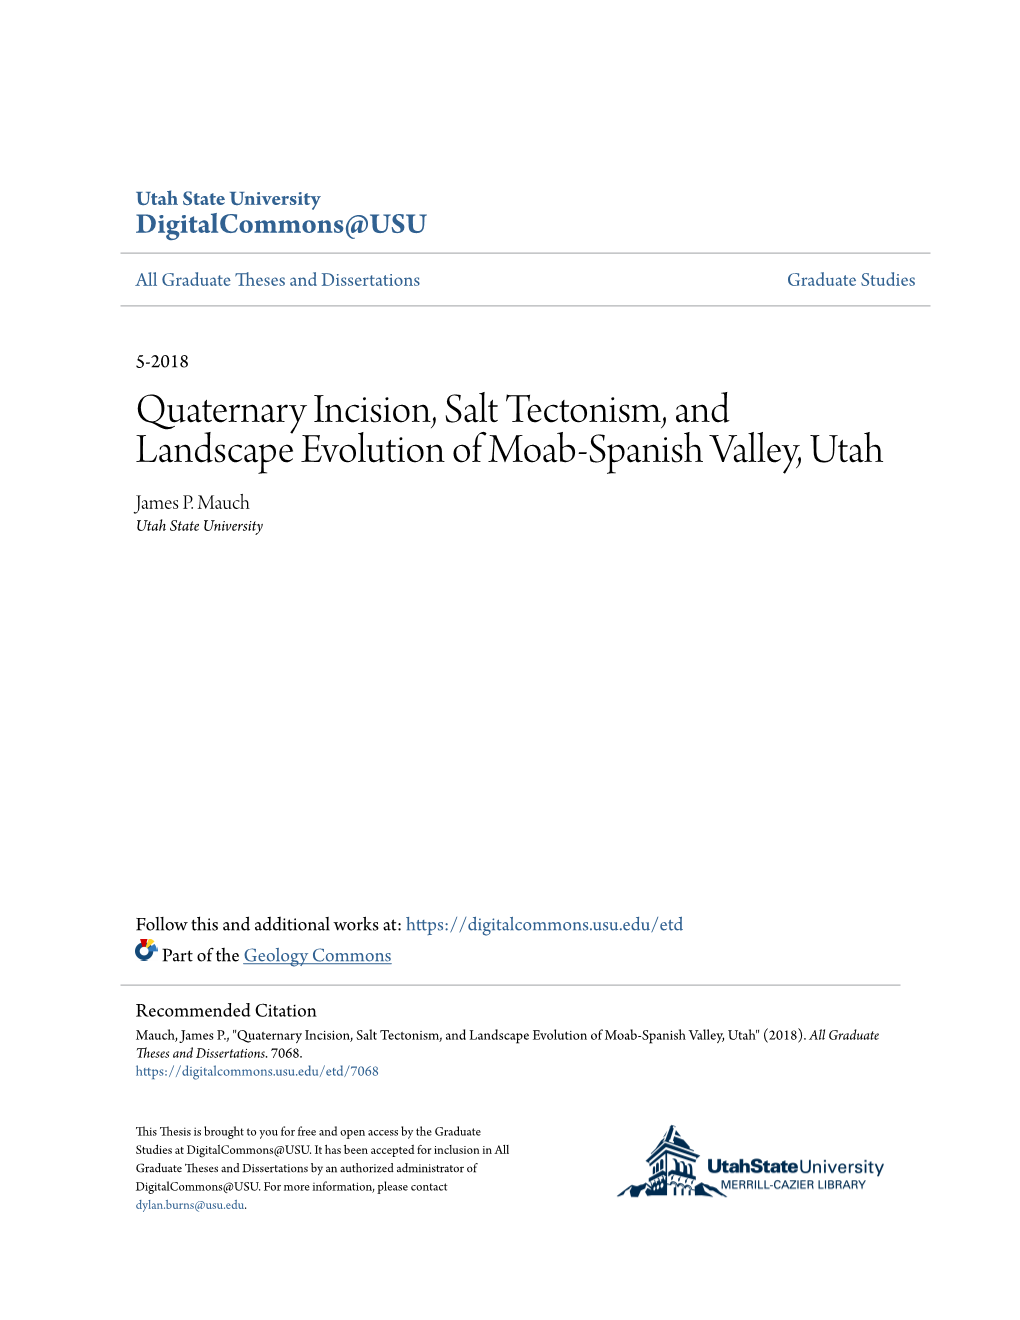 Quaternary Incision, Salt Tectonism, and Landscape Evolution of Moab-Spanish Valley, Utah James P